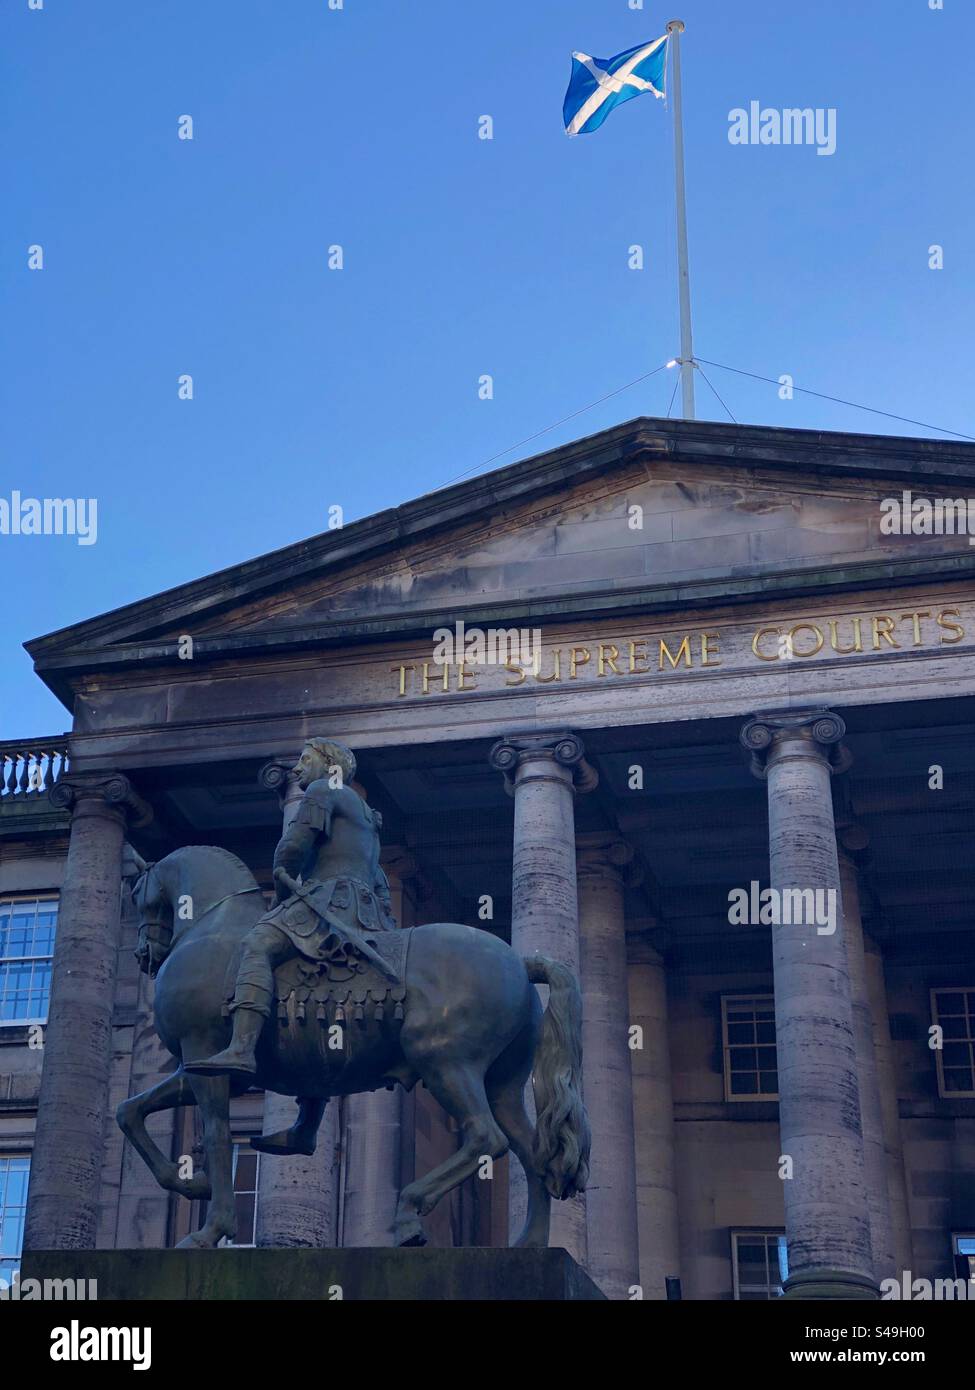 The Supreme courts of Scotland, Parliament Square, Edinburgh Stock Photo